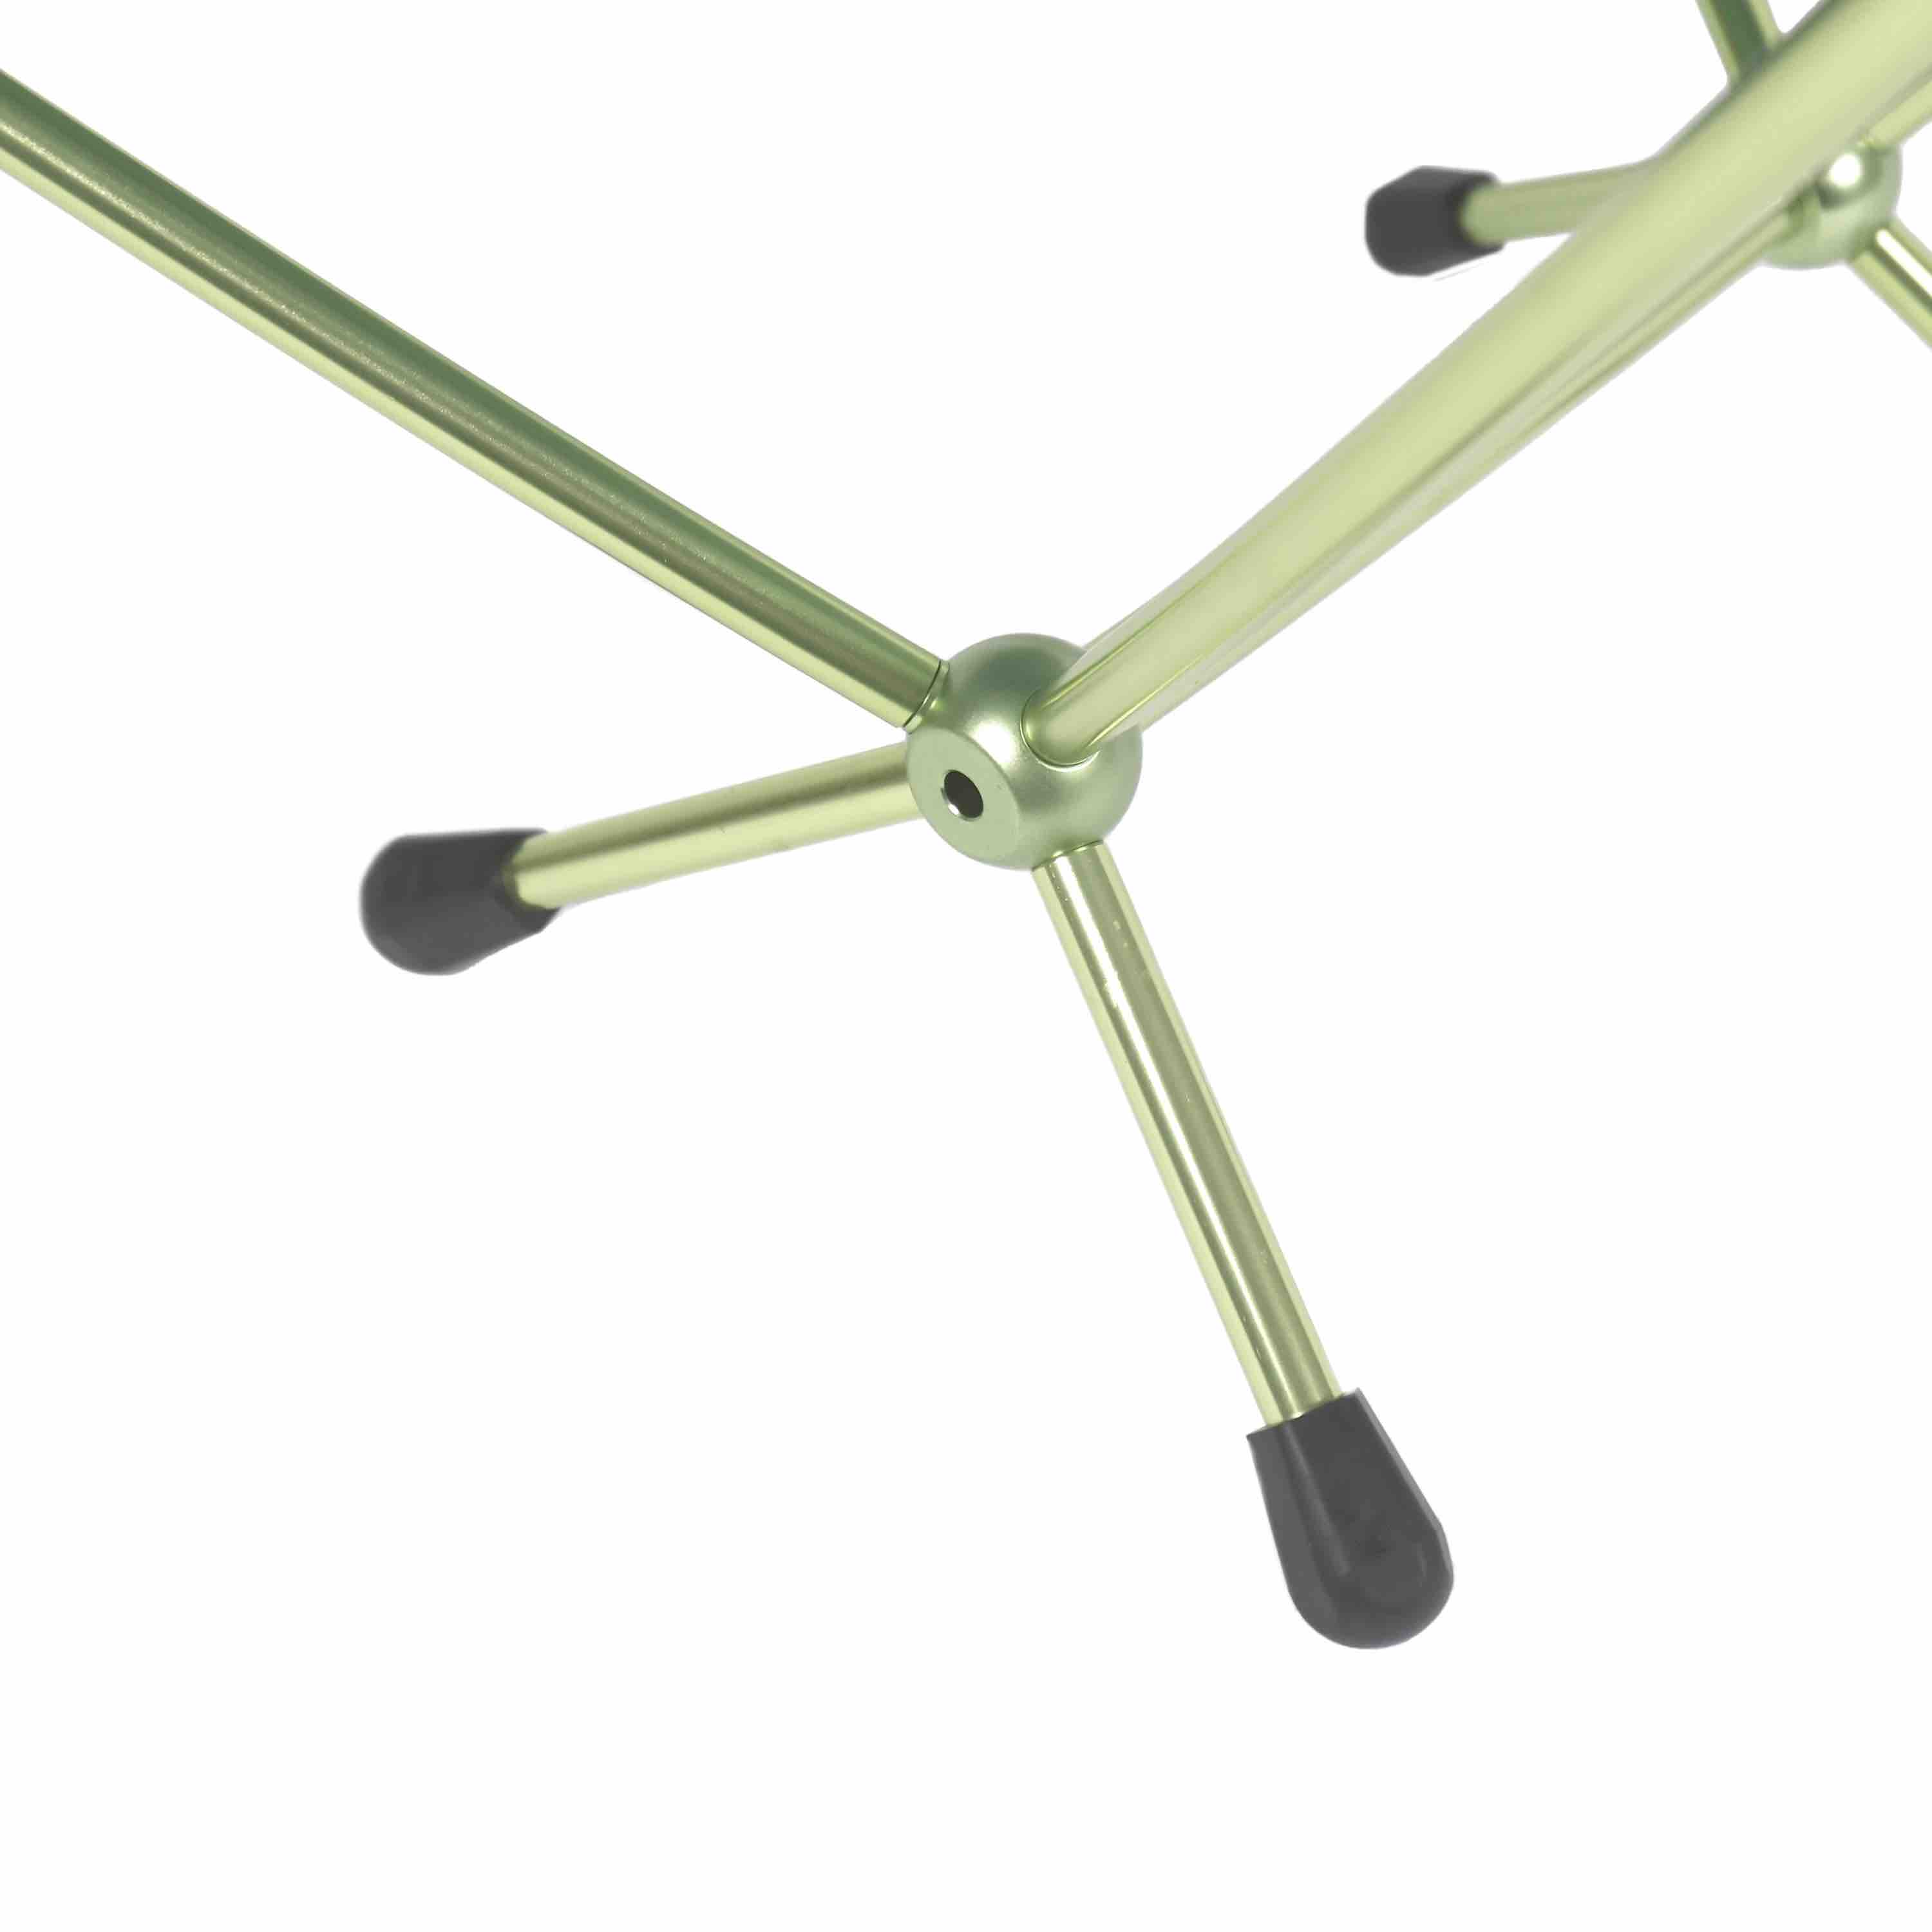 Grand Trunk/Alite Mantis Chair (green)